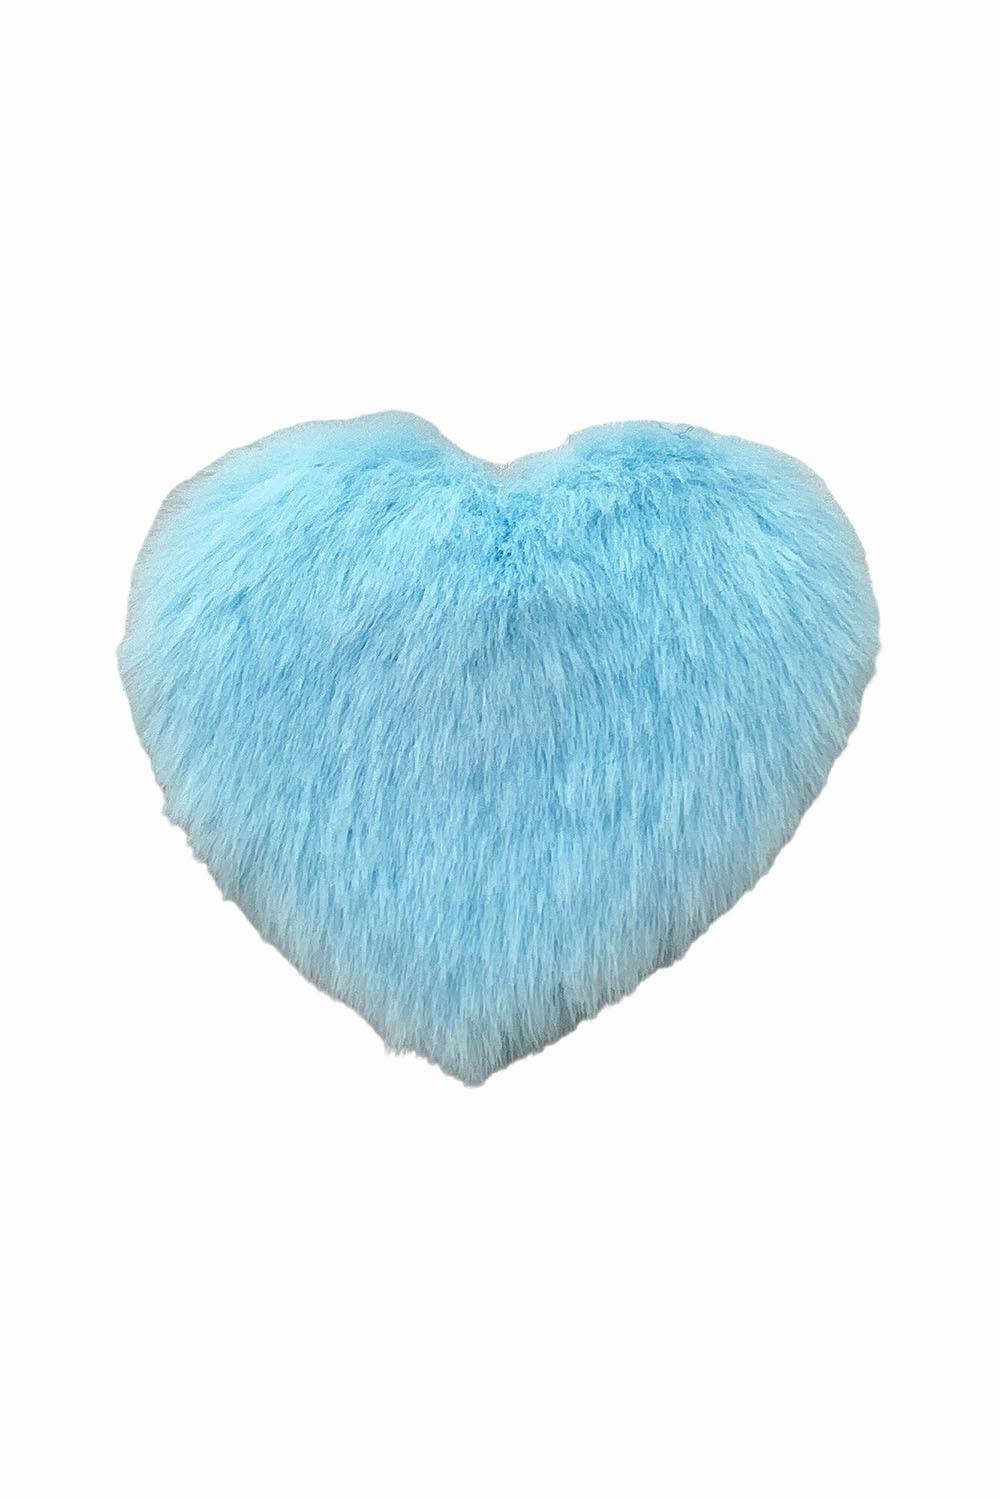 Fake fur heart pin (フェイクファーハートピン)